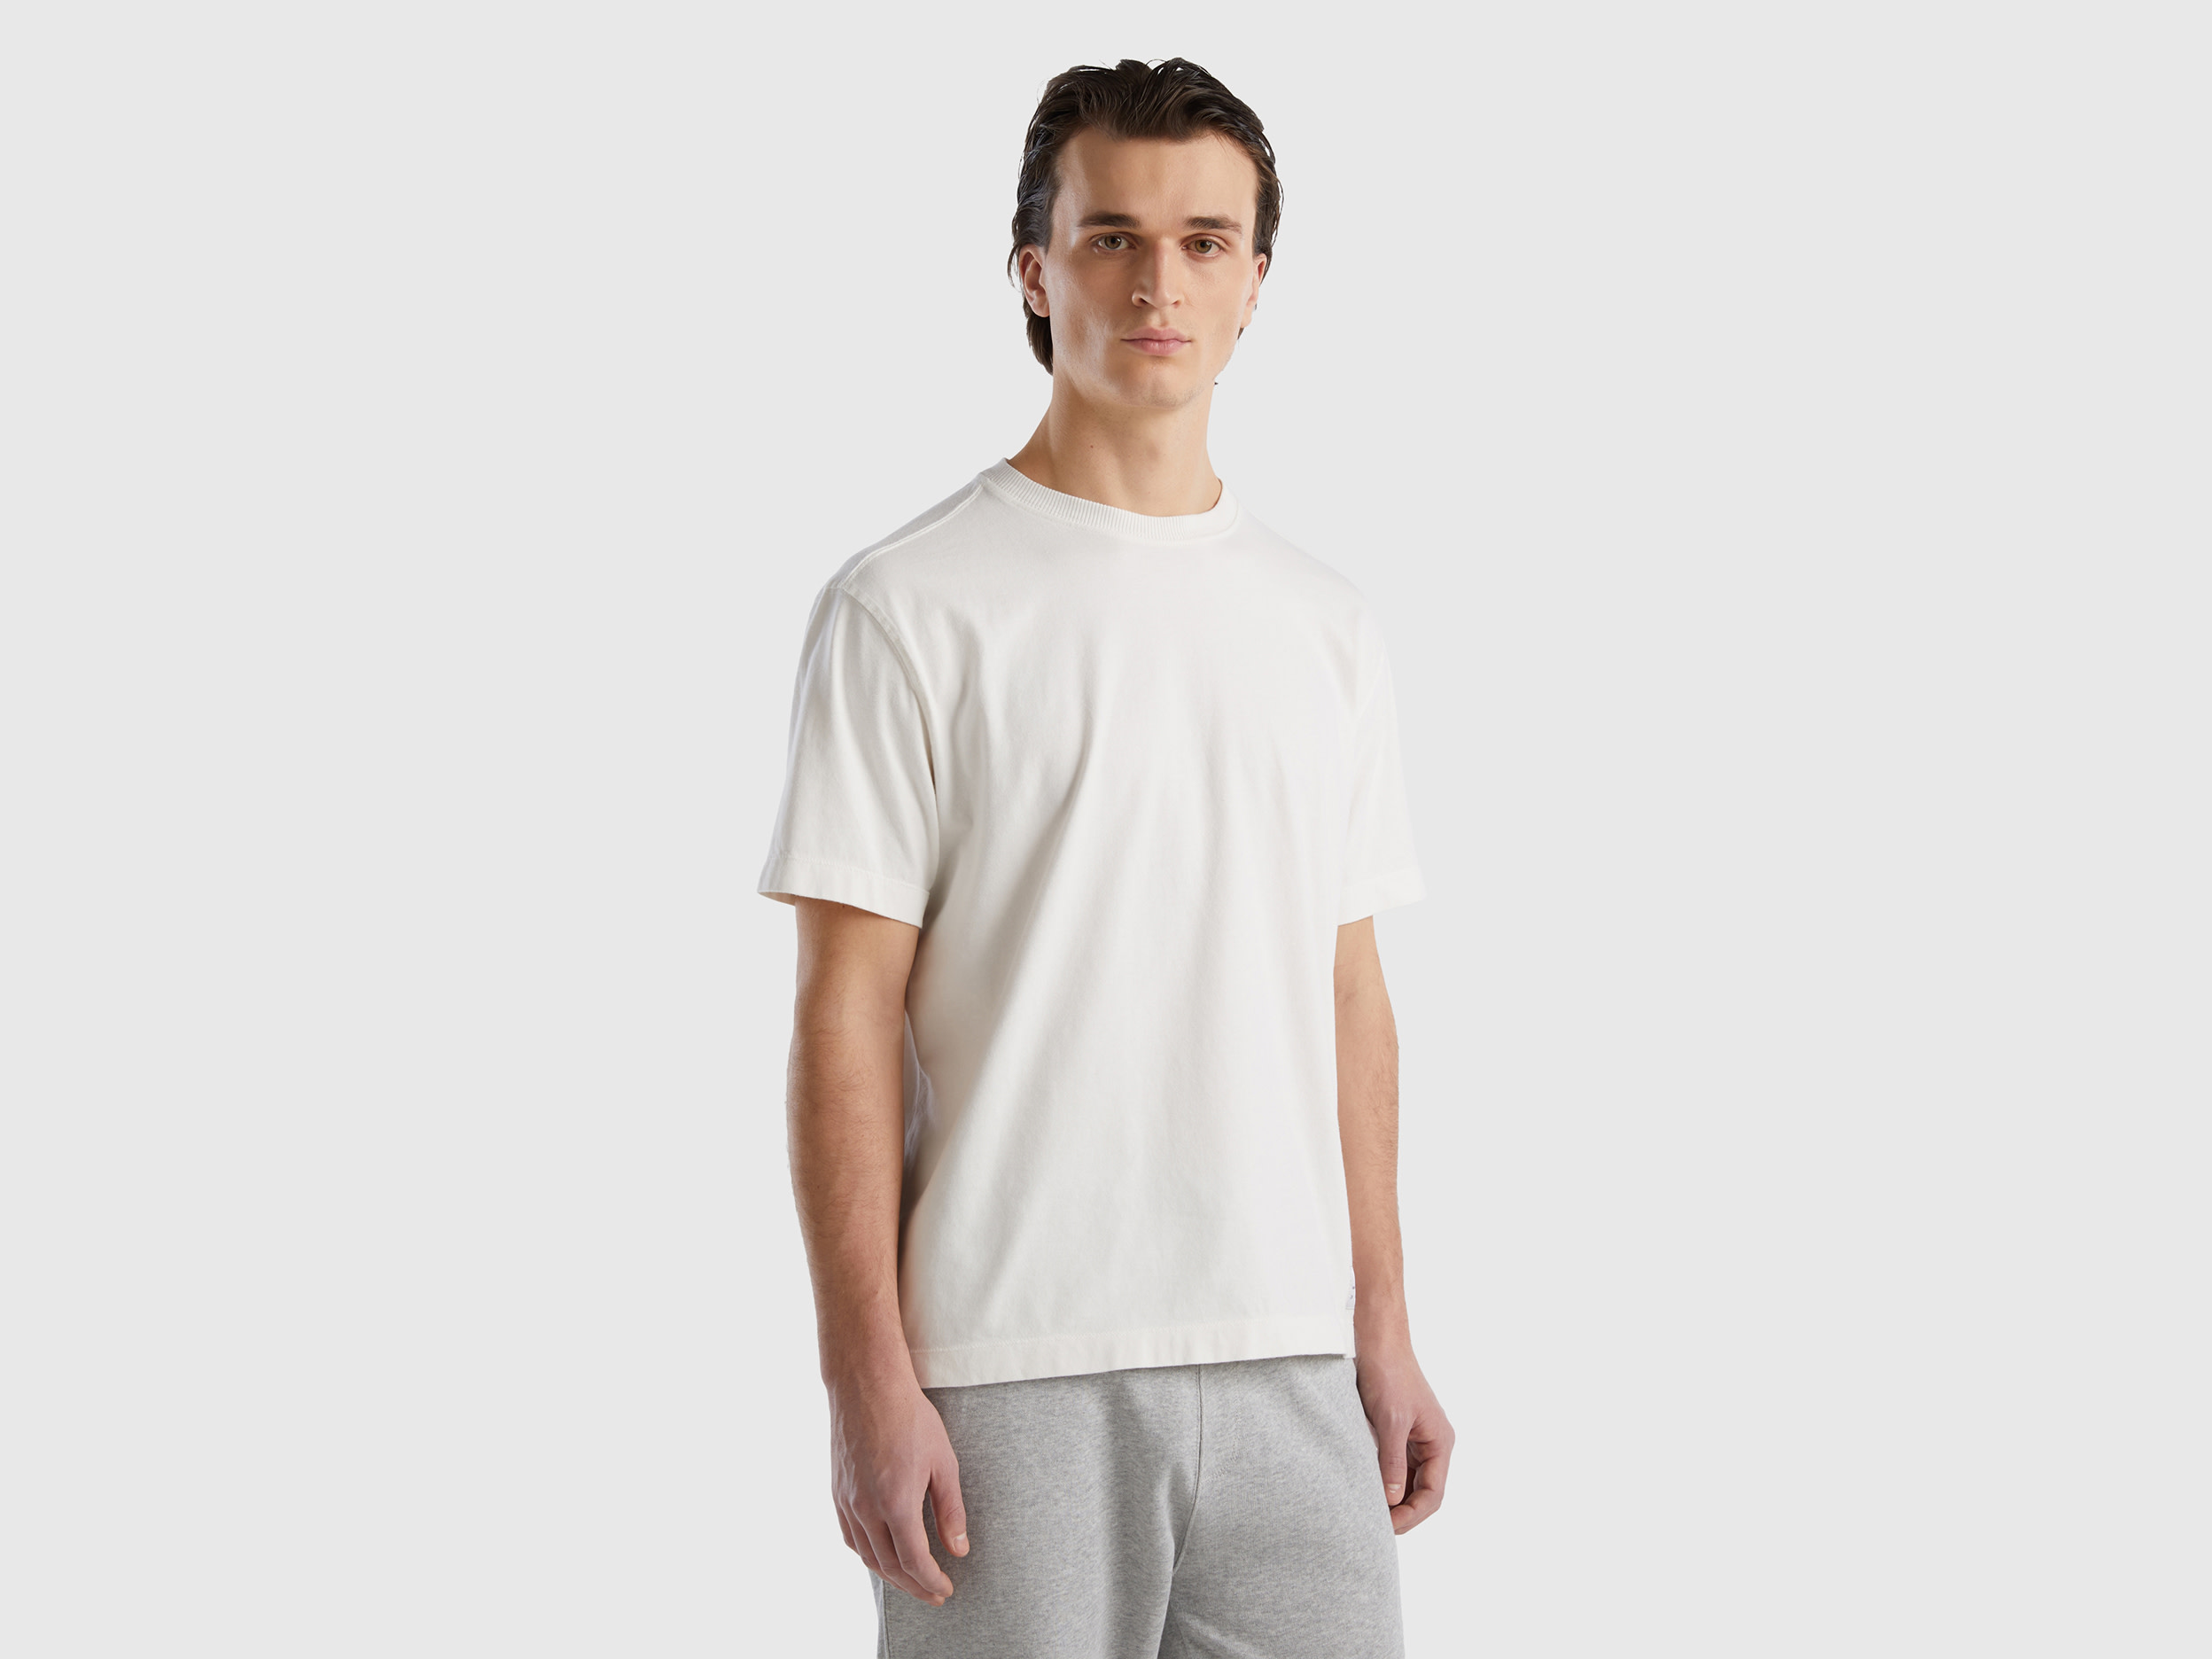 Image of Benetton, 100% Organic Cotton Crew Neck T-shirt, size S, Creamy White, Men